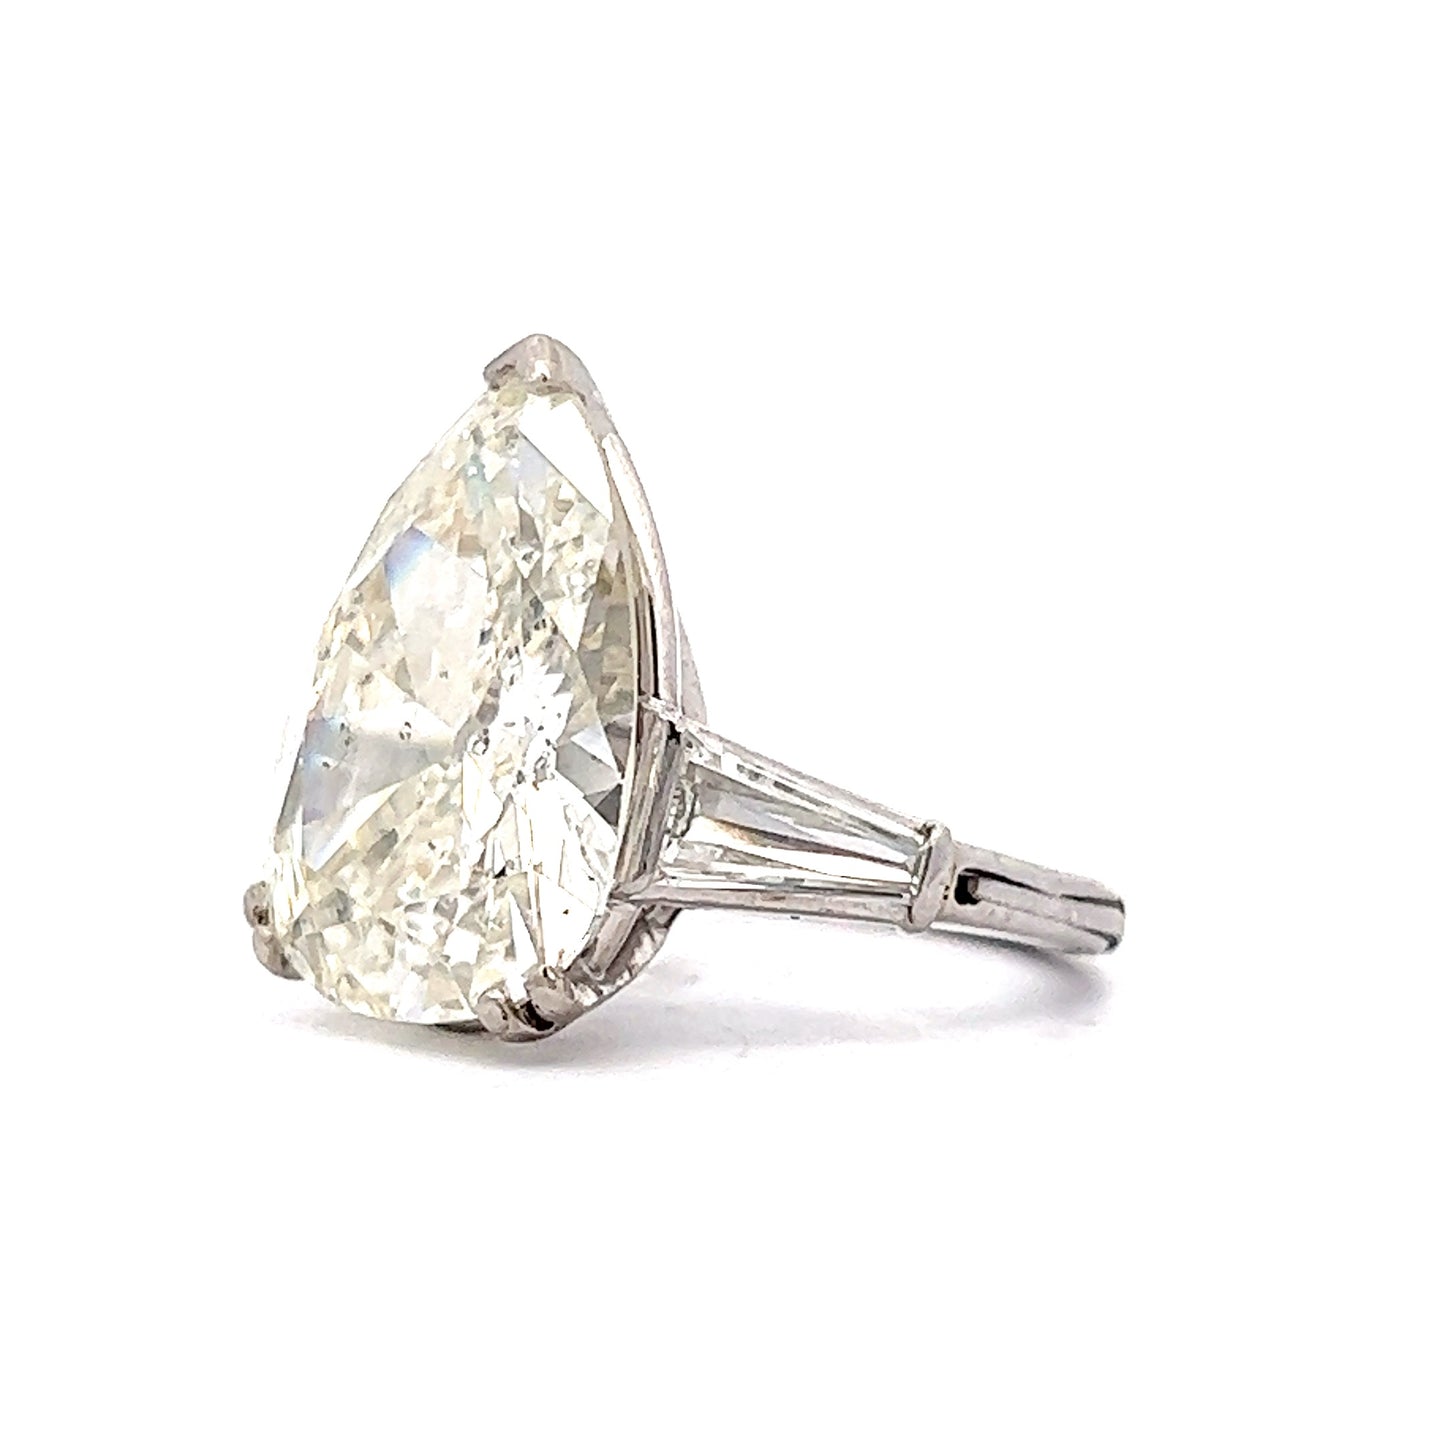 8.67 Pear Cut Diamond Engagement Ring in Platinum